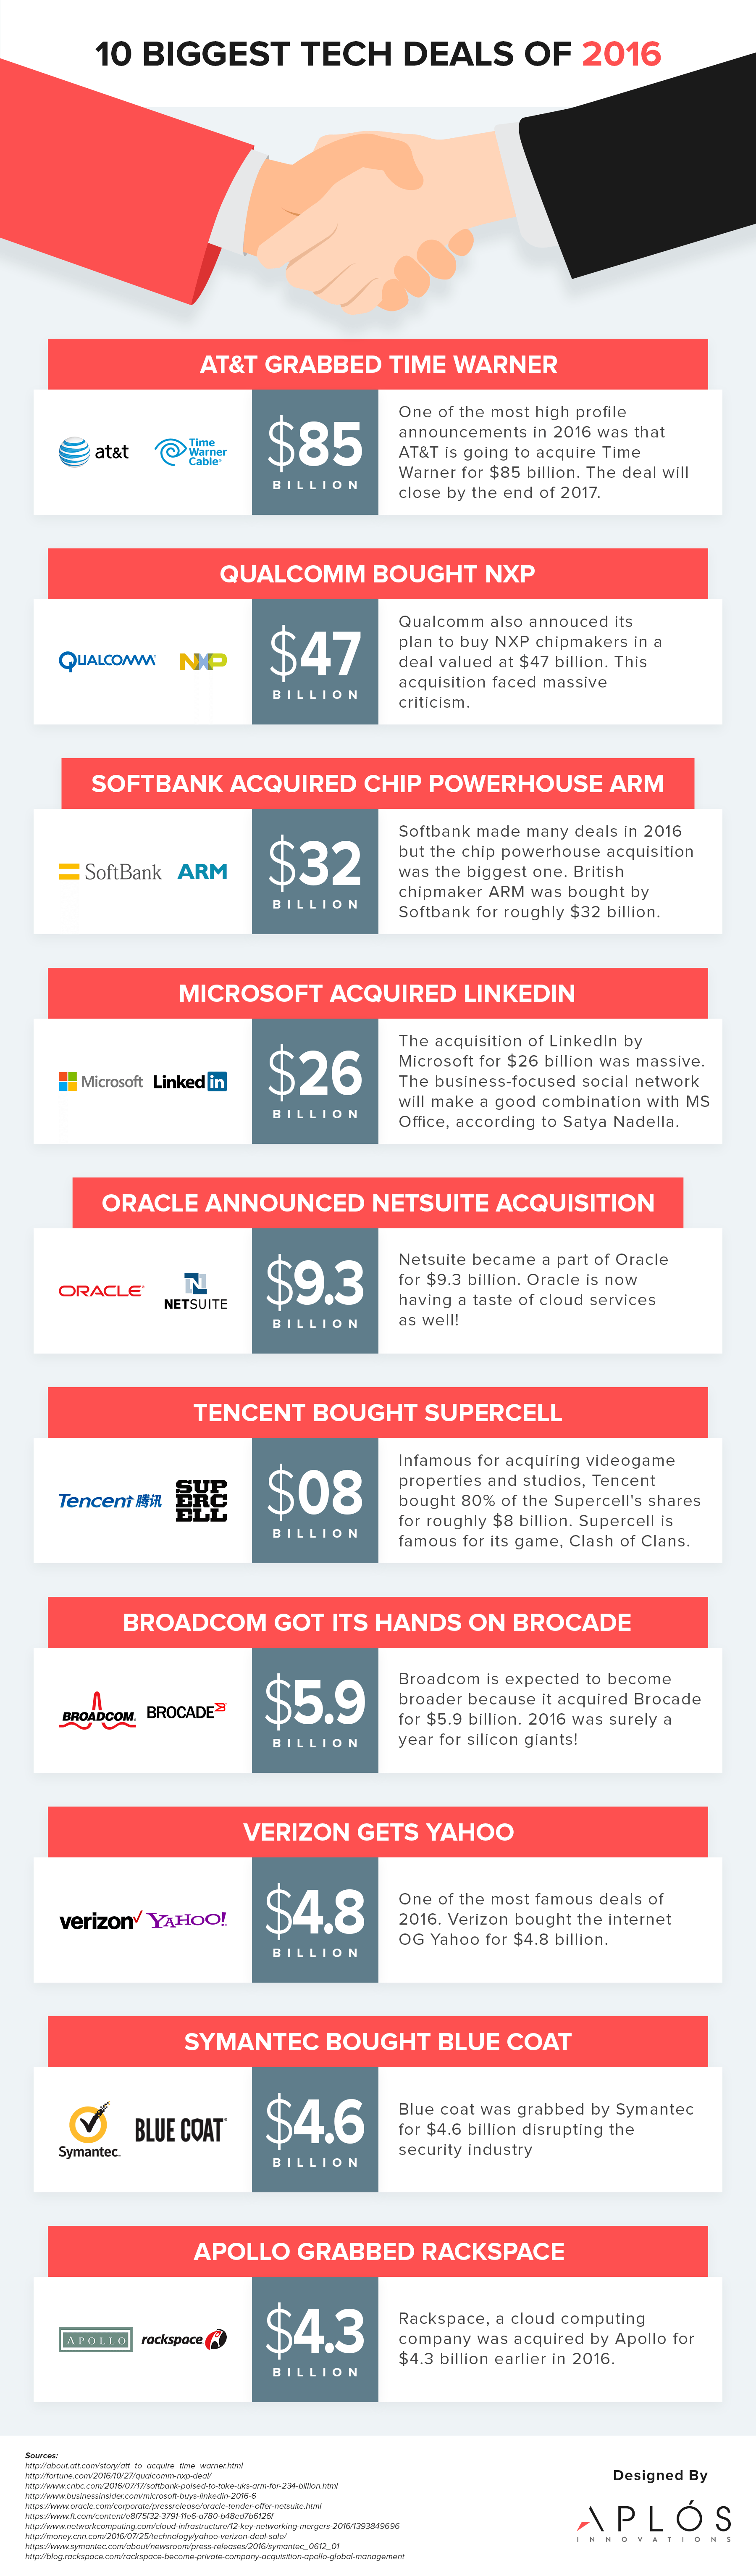 10-Biggest-Tech-Deals-of-2016